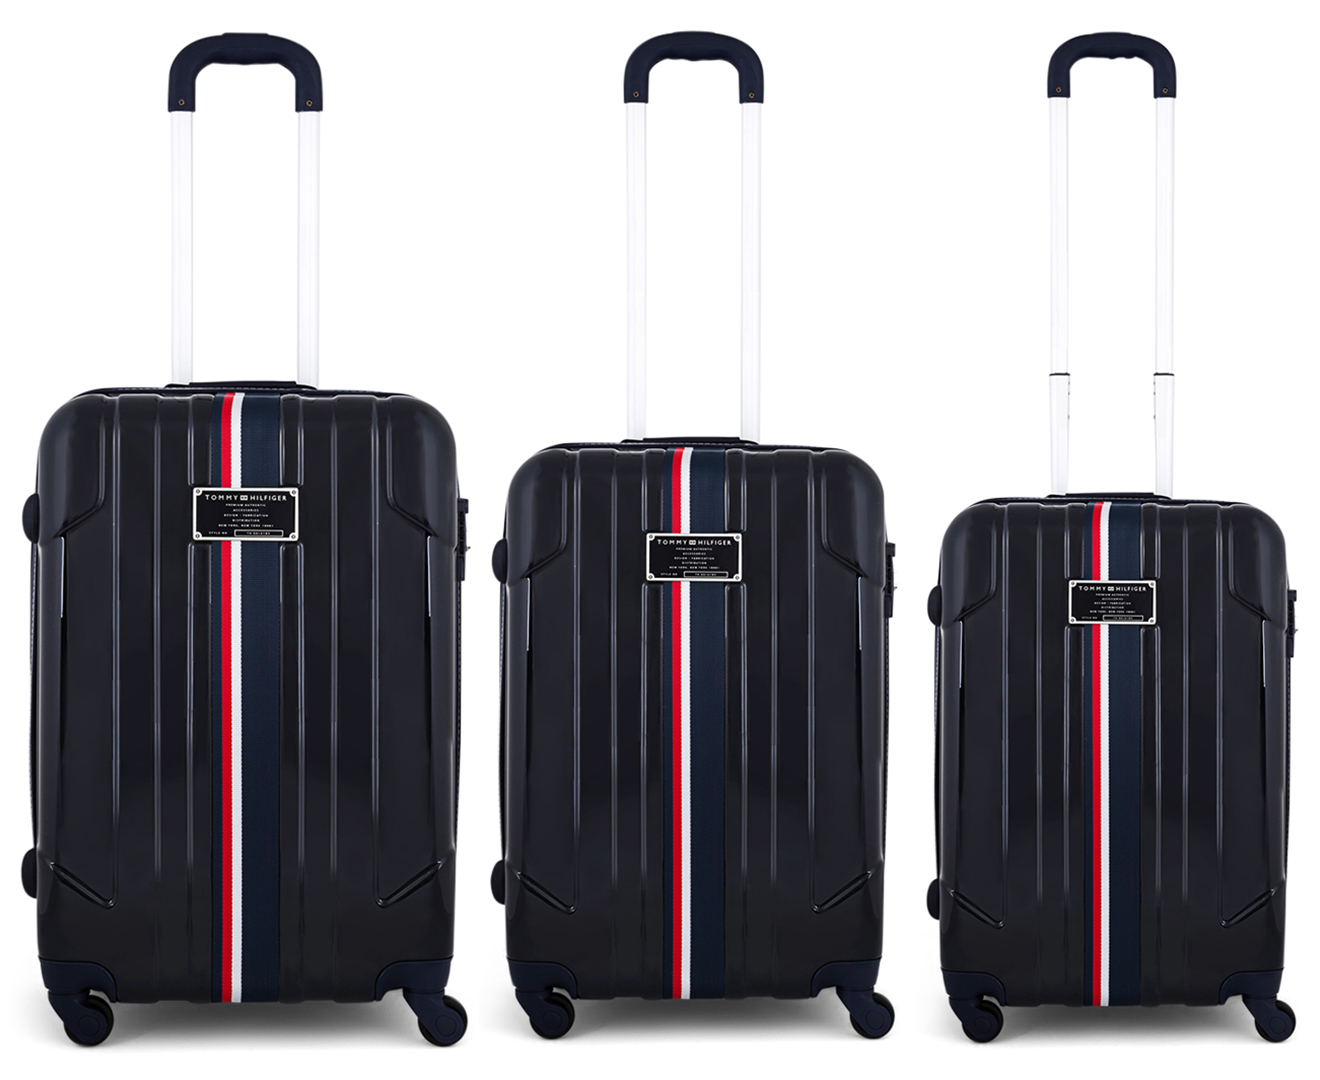 hilfiger luggage set,welcome to buy,www.wgi.ooo